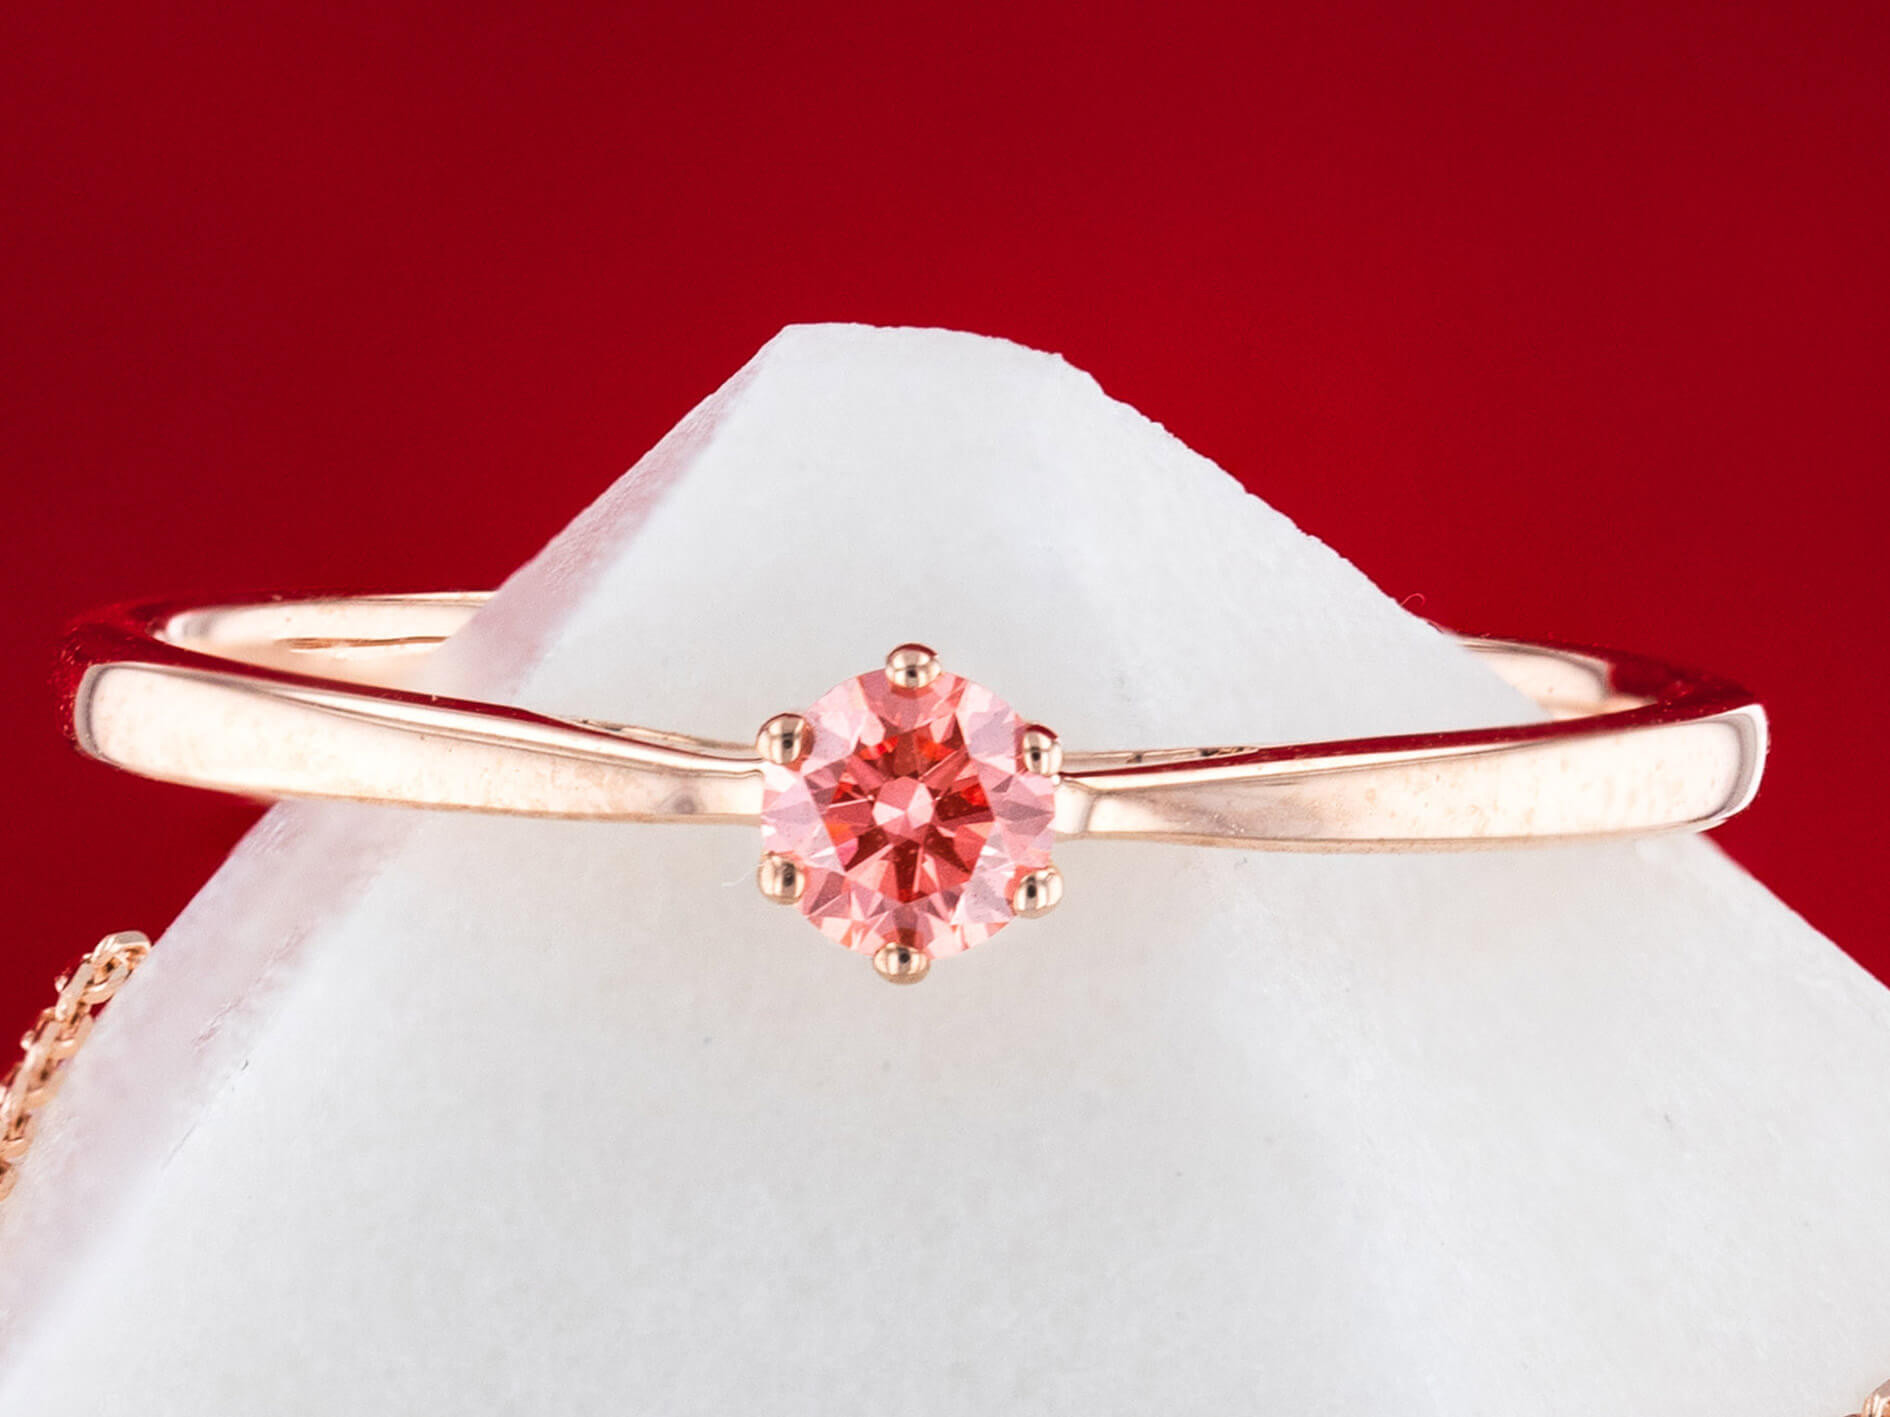 Pink Argyle Diamonds Melbourne  Argyle Pink Diamond Engagement Ring